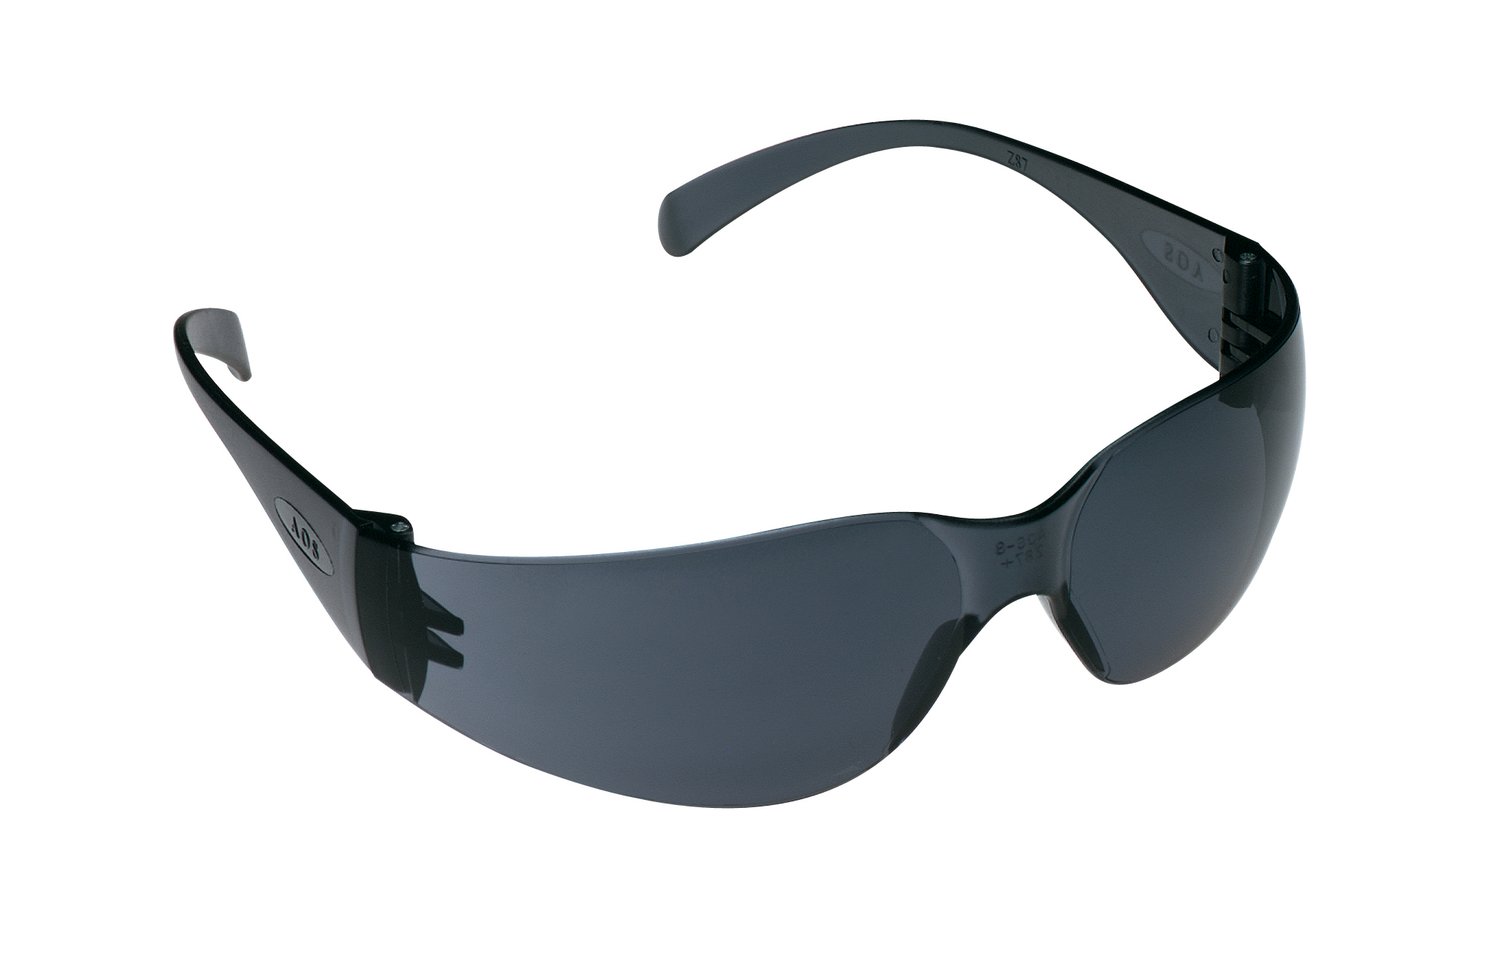 7010386340 - 3M Virtua Protective Eyewear 11330-00000-20 Gray Anti-Fog Lens, Gray
Temple 20 EA/Case